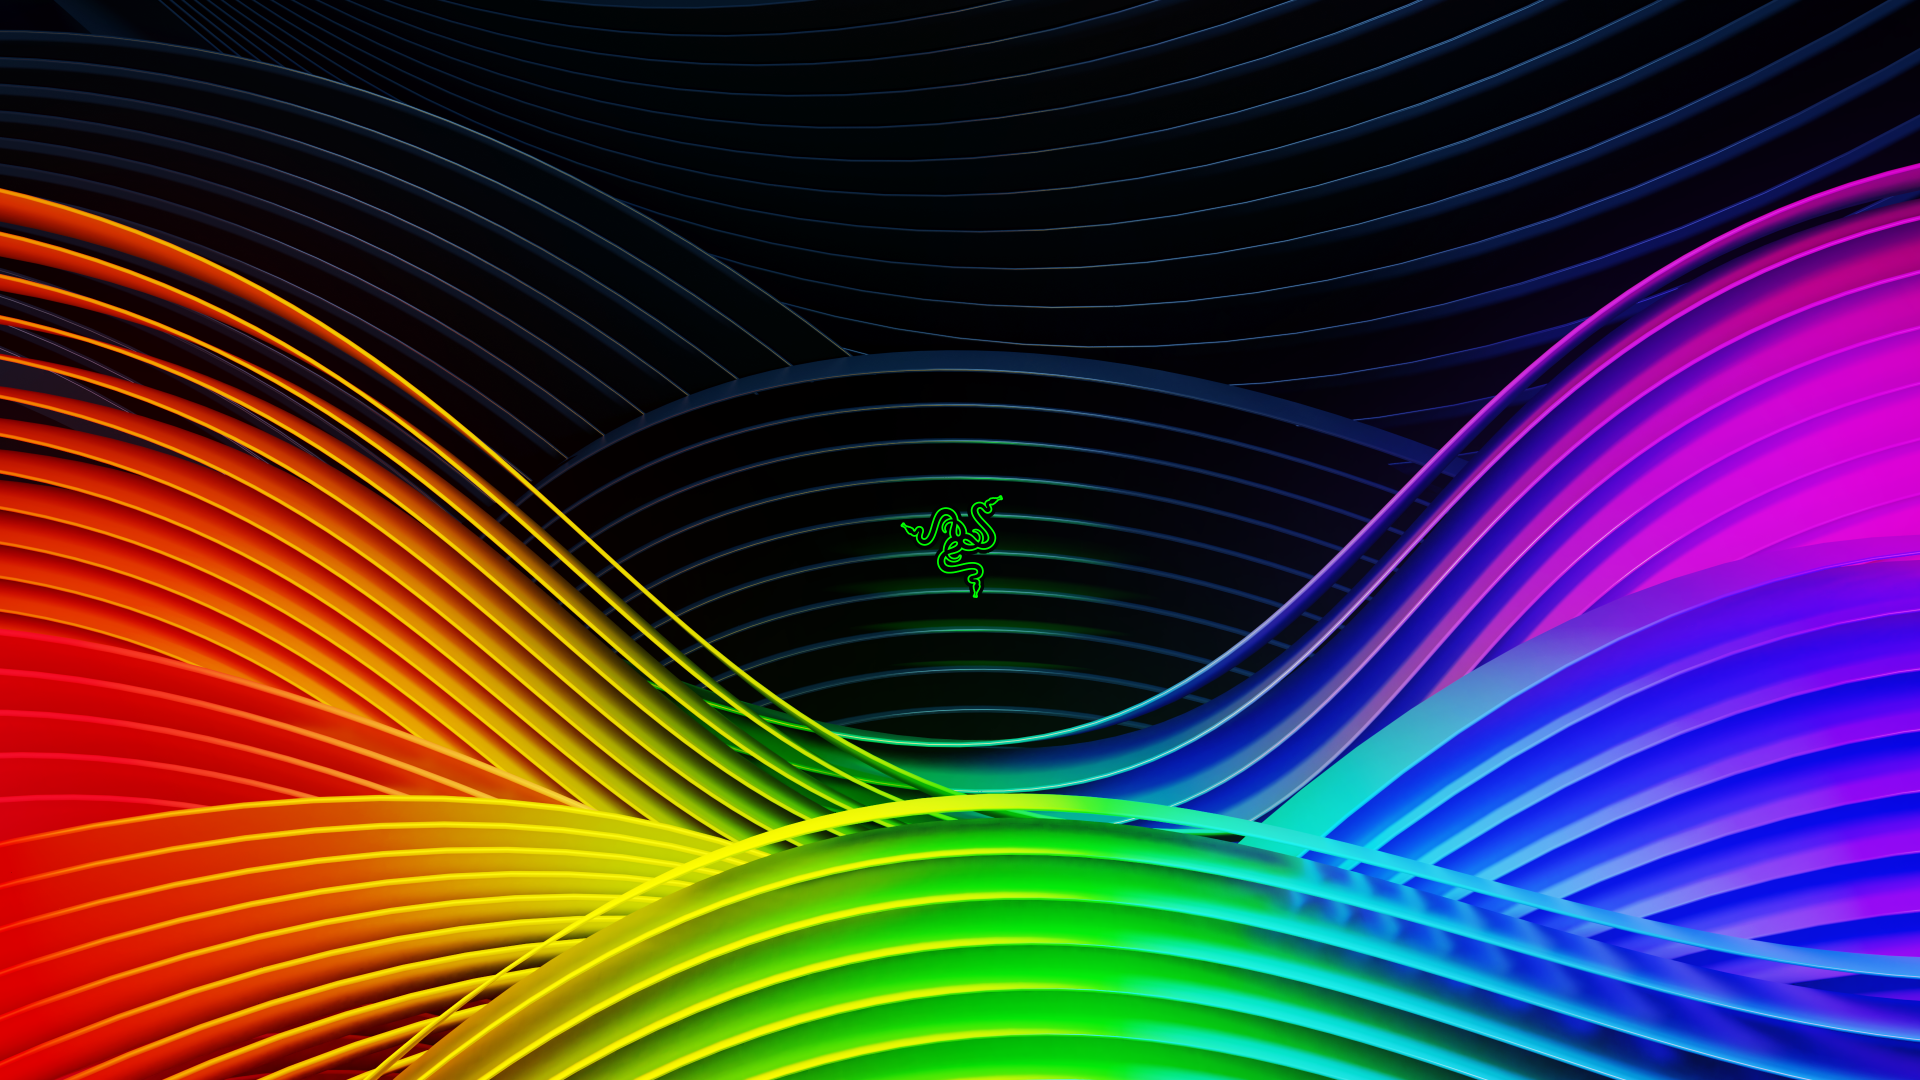 Razer Wallpaper 4K, Colorful, Spectrum, Waves, Ridges, Neon, Abstract, #131